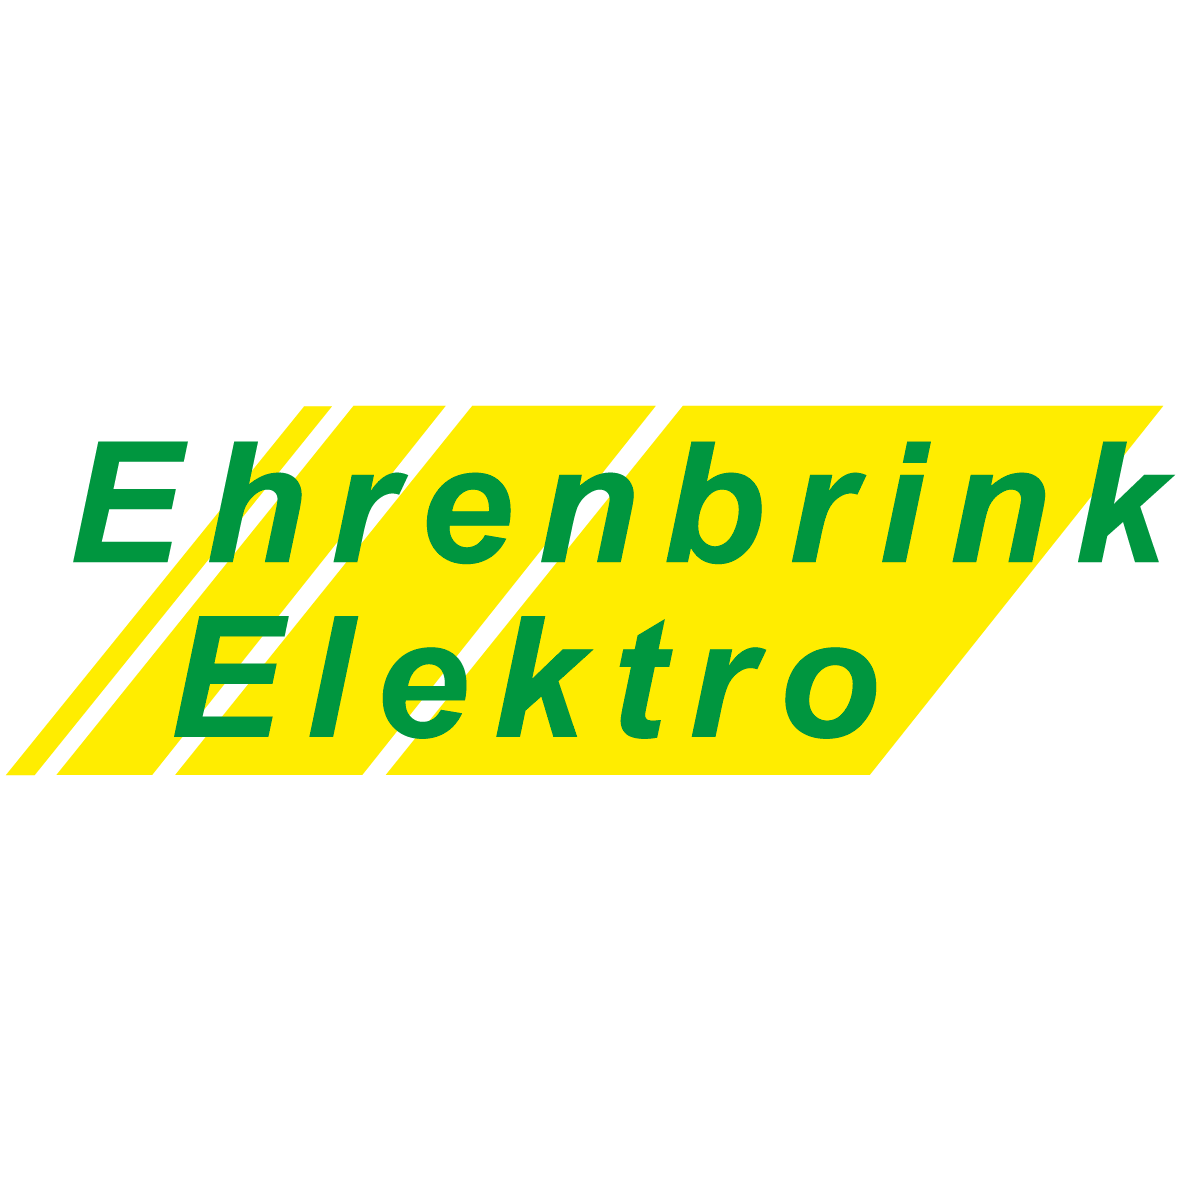 Ehrenbrink Elektro  